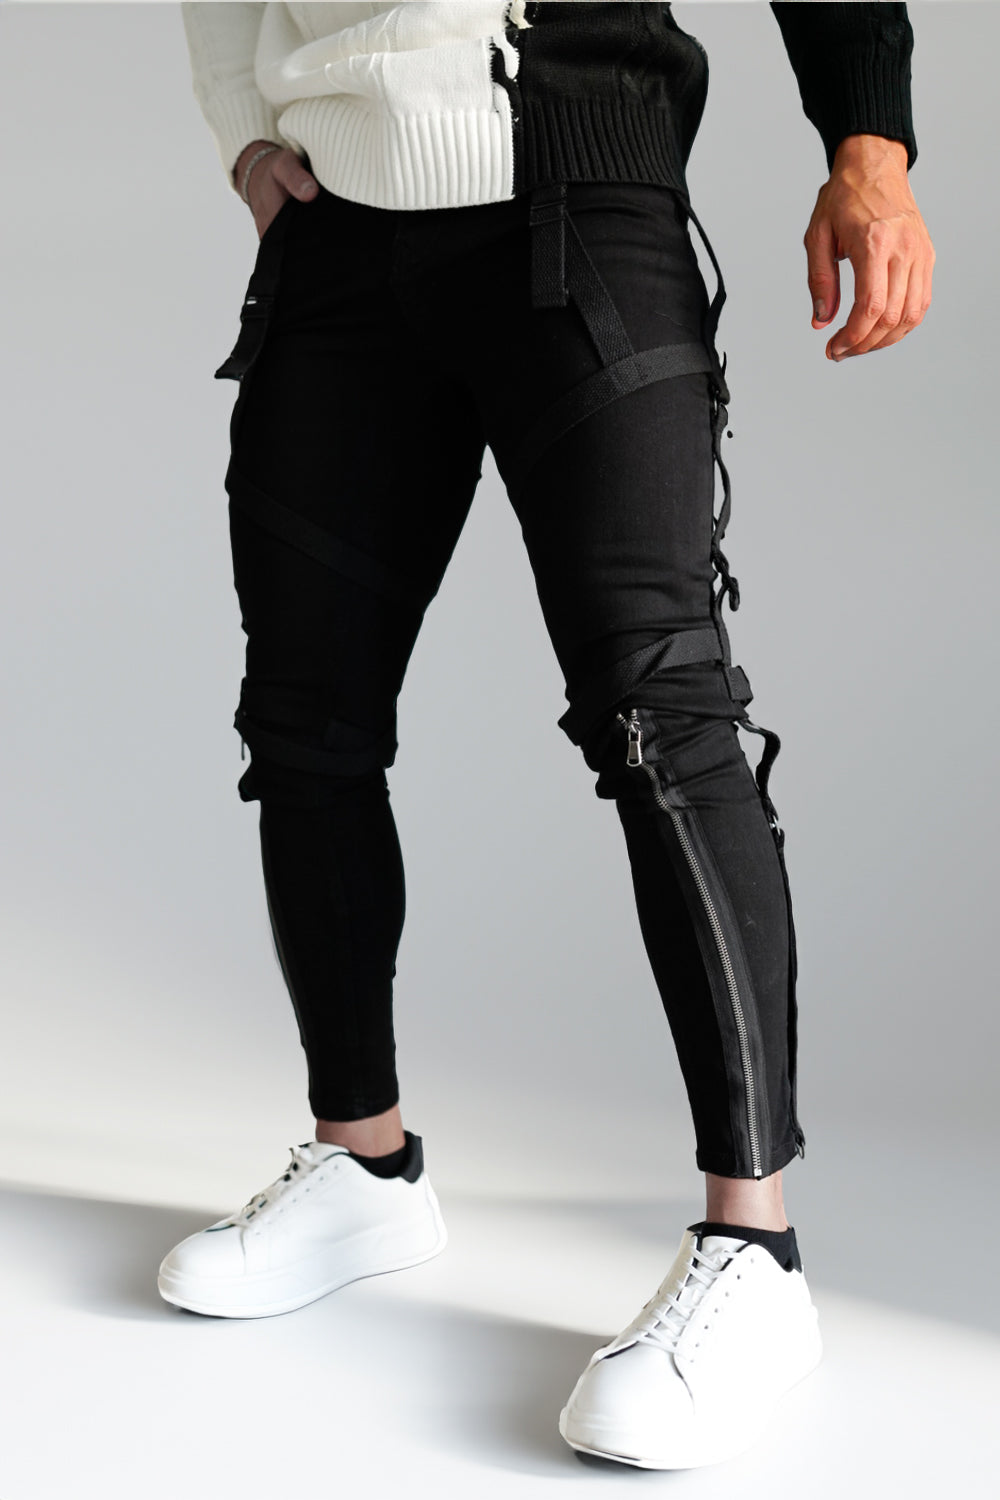 Gingtto Men's Zipper Skinny Jeans - Black